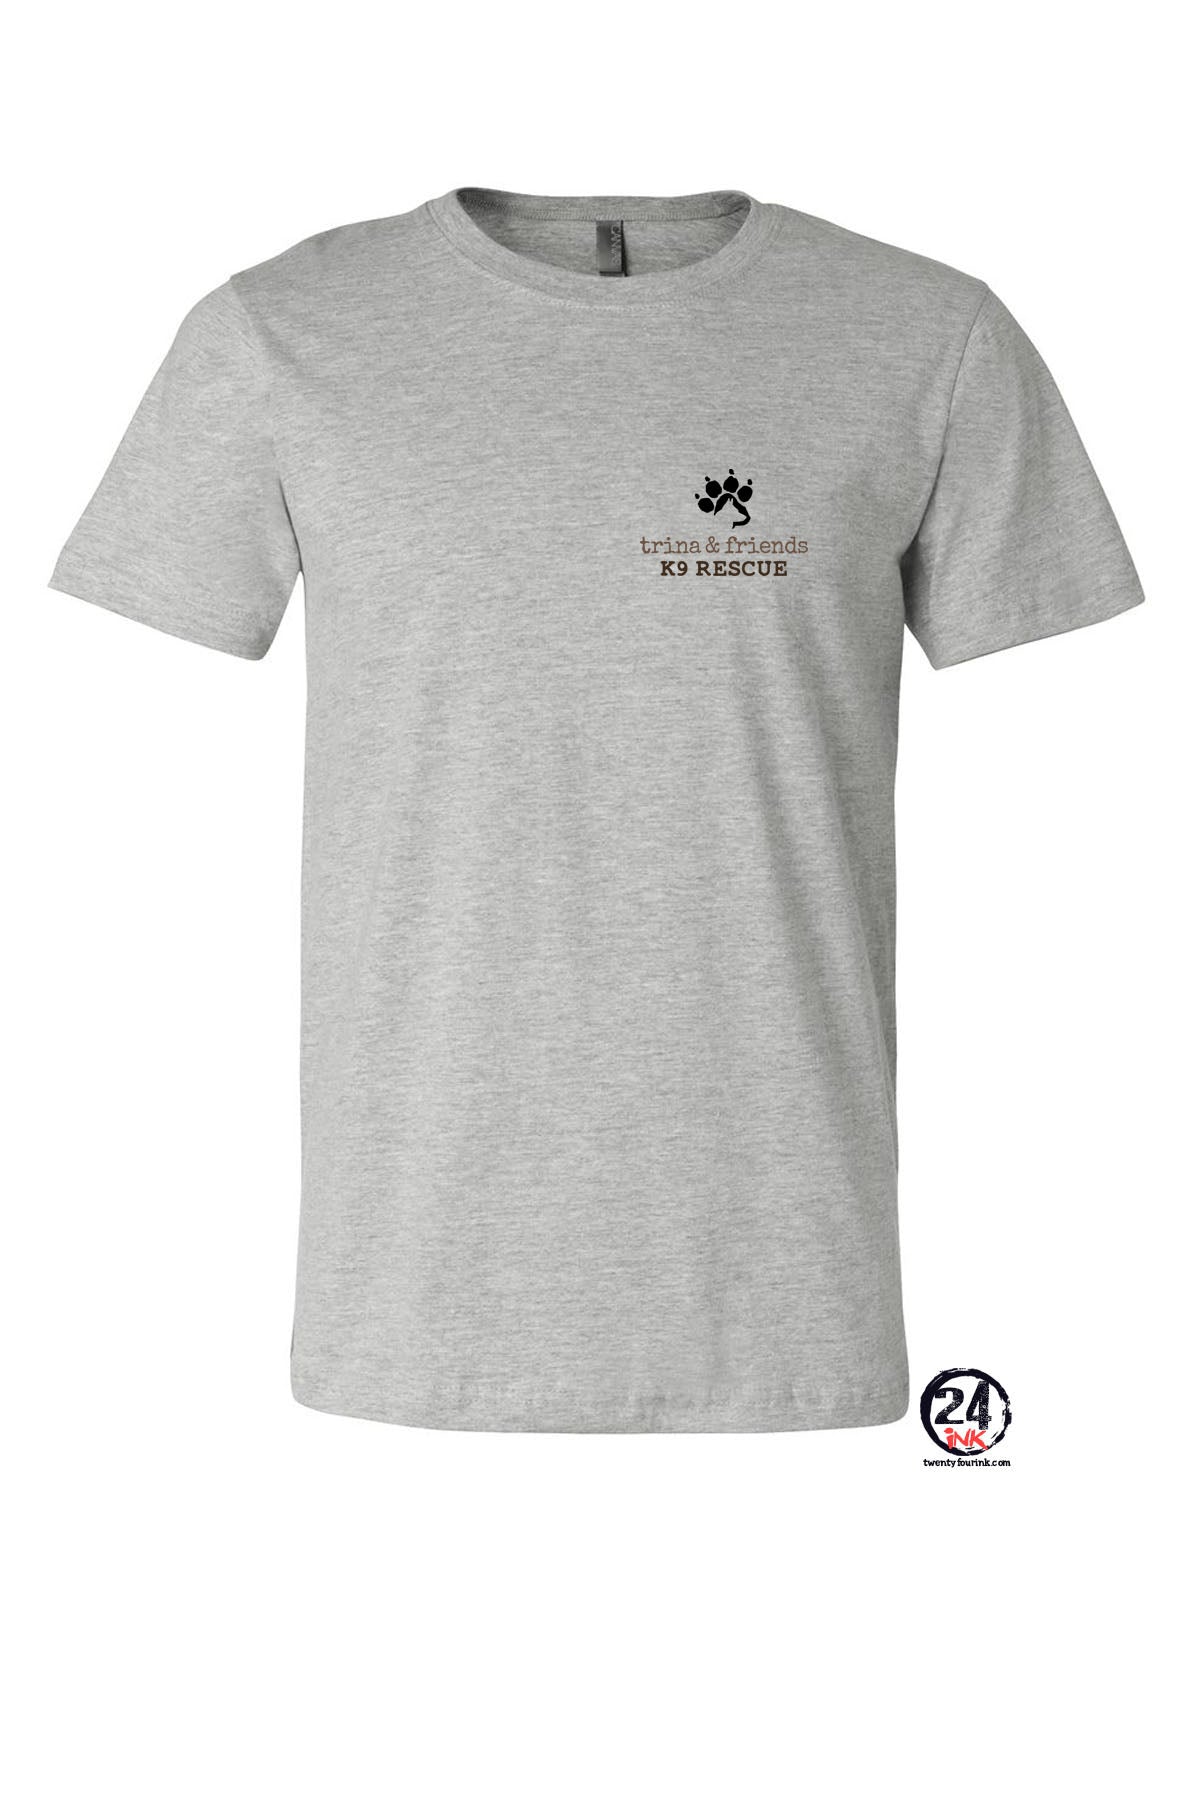 Trina & Friends design 5 T-Shirt | T-Shirts